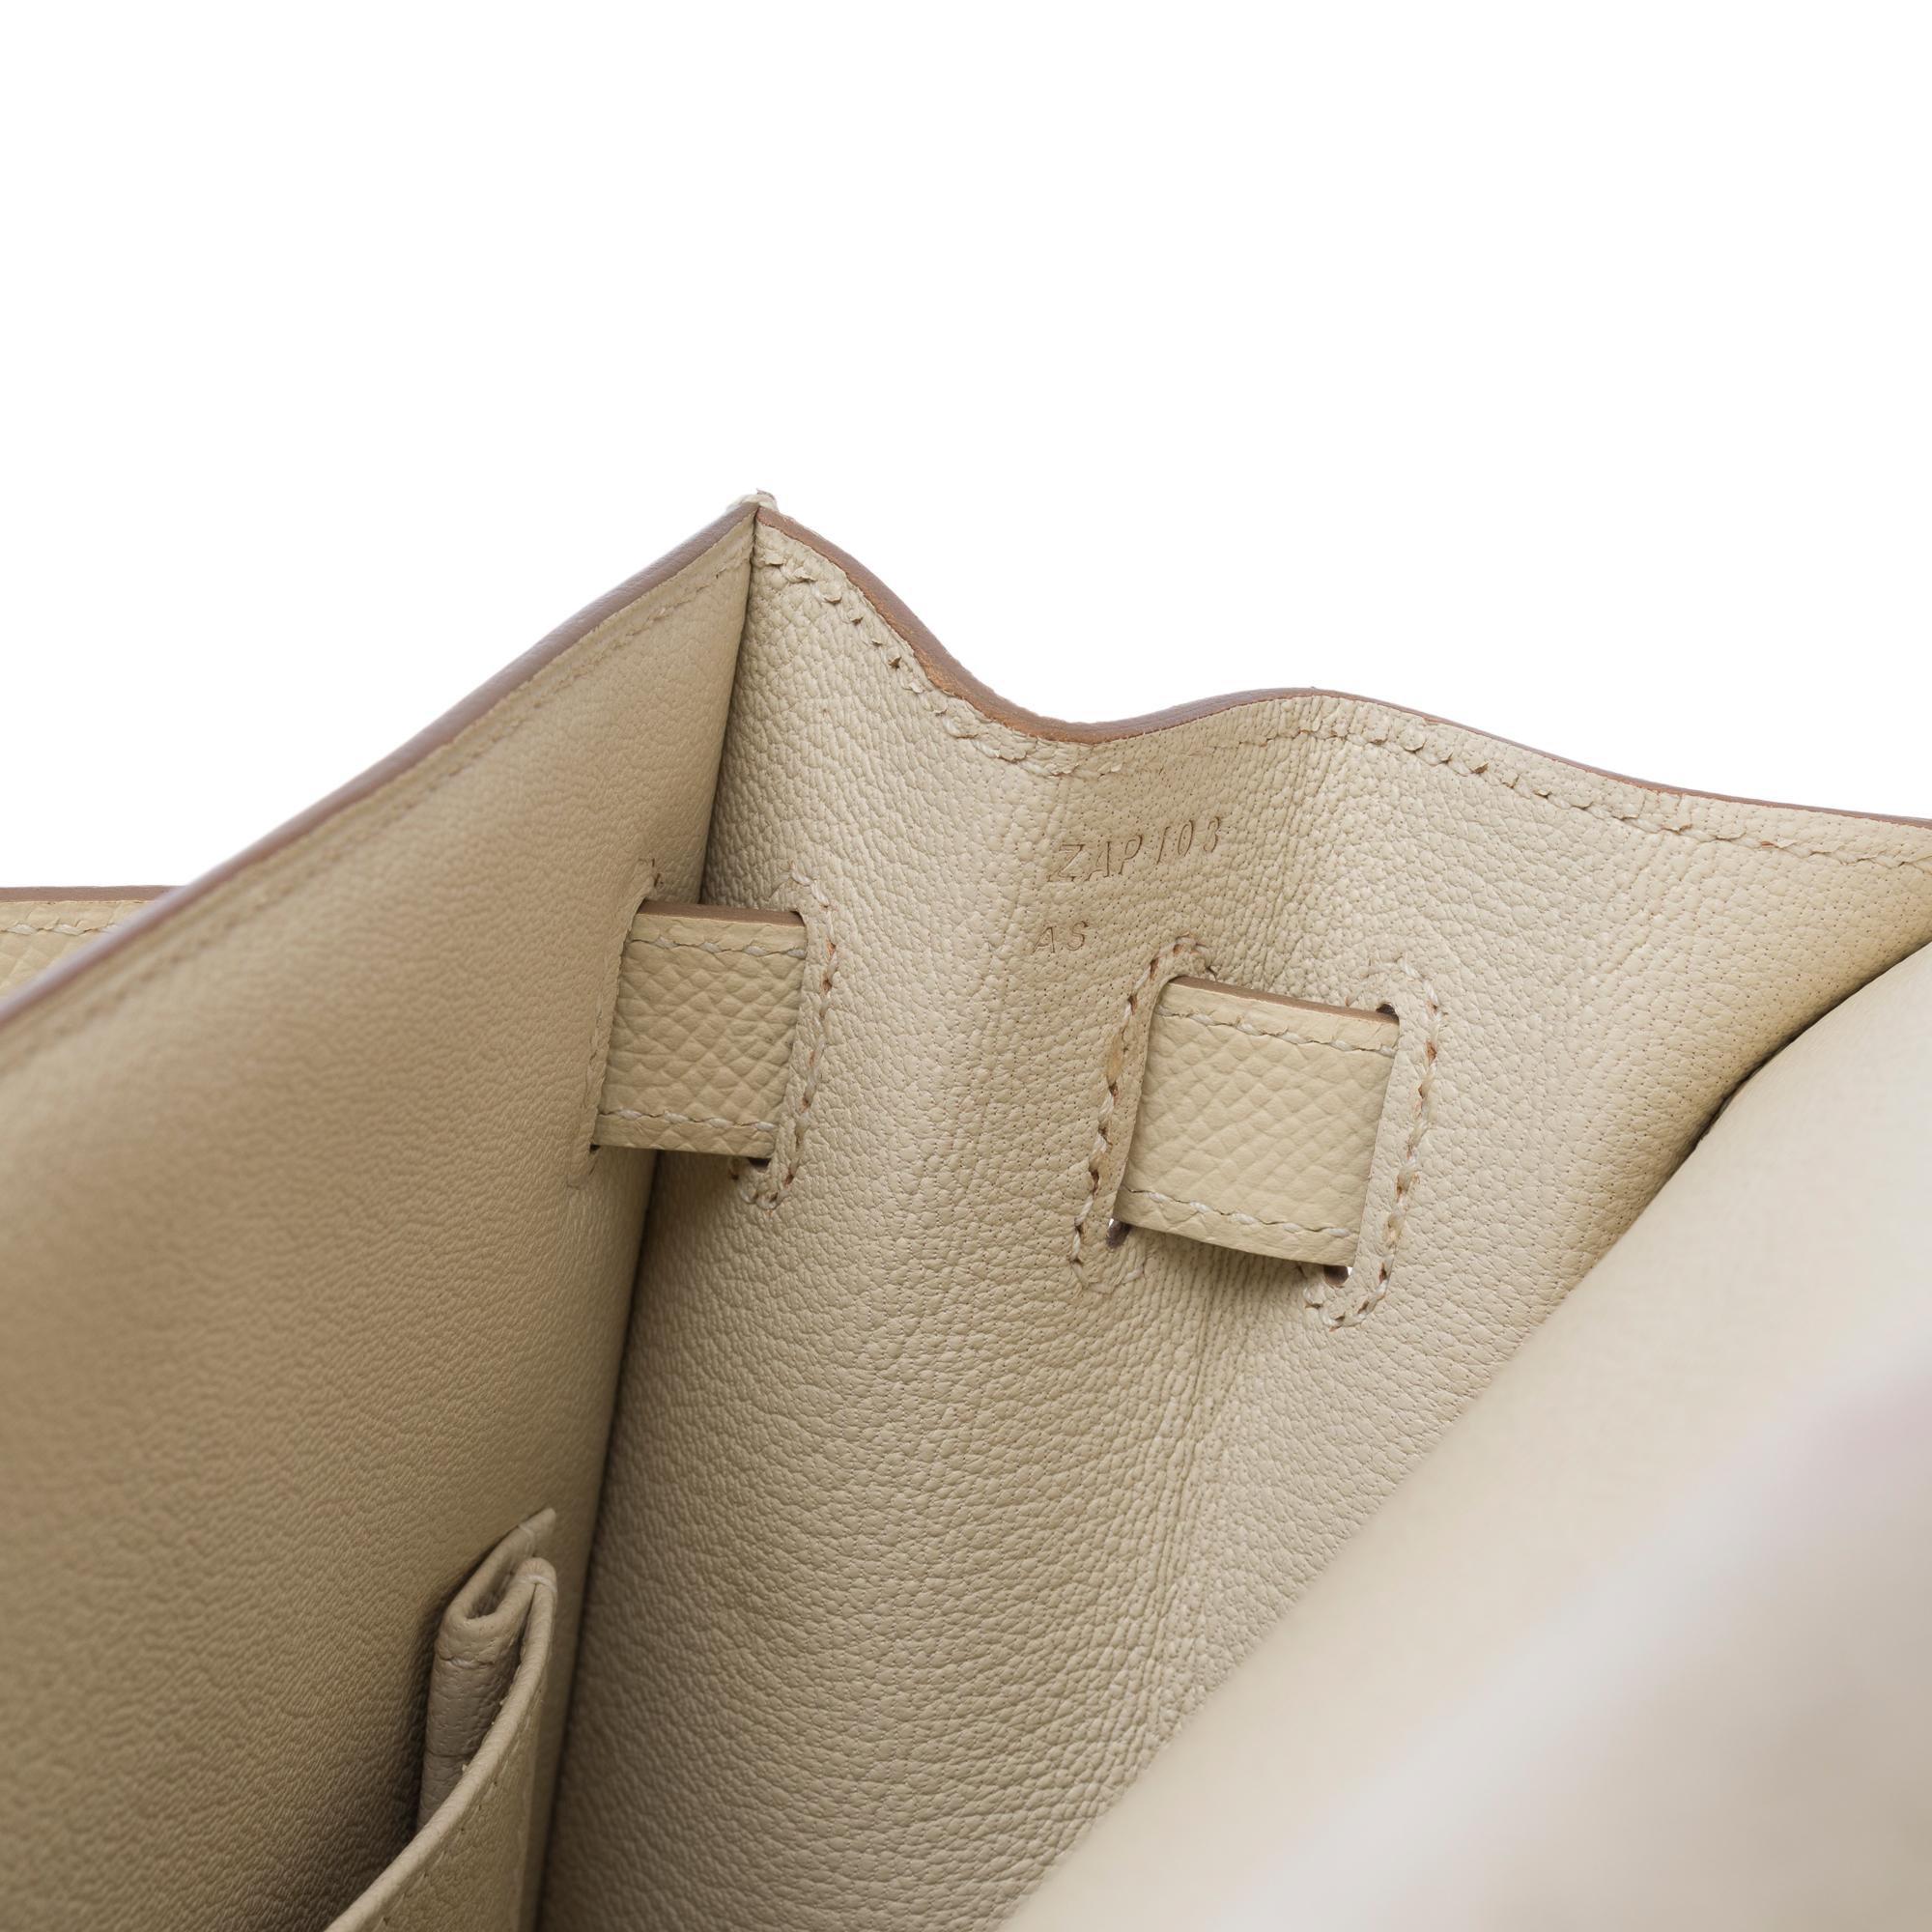 Stunning Hermès Kelly 32 sellier handbag strap in Craie epsom leather, GHW 5